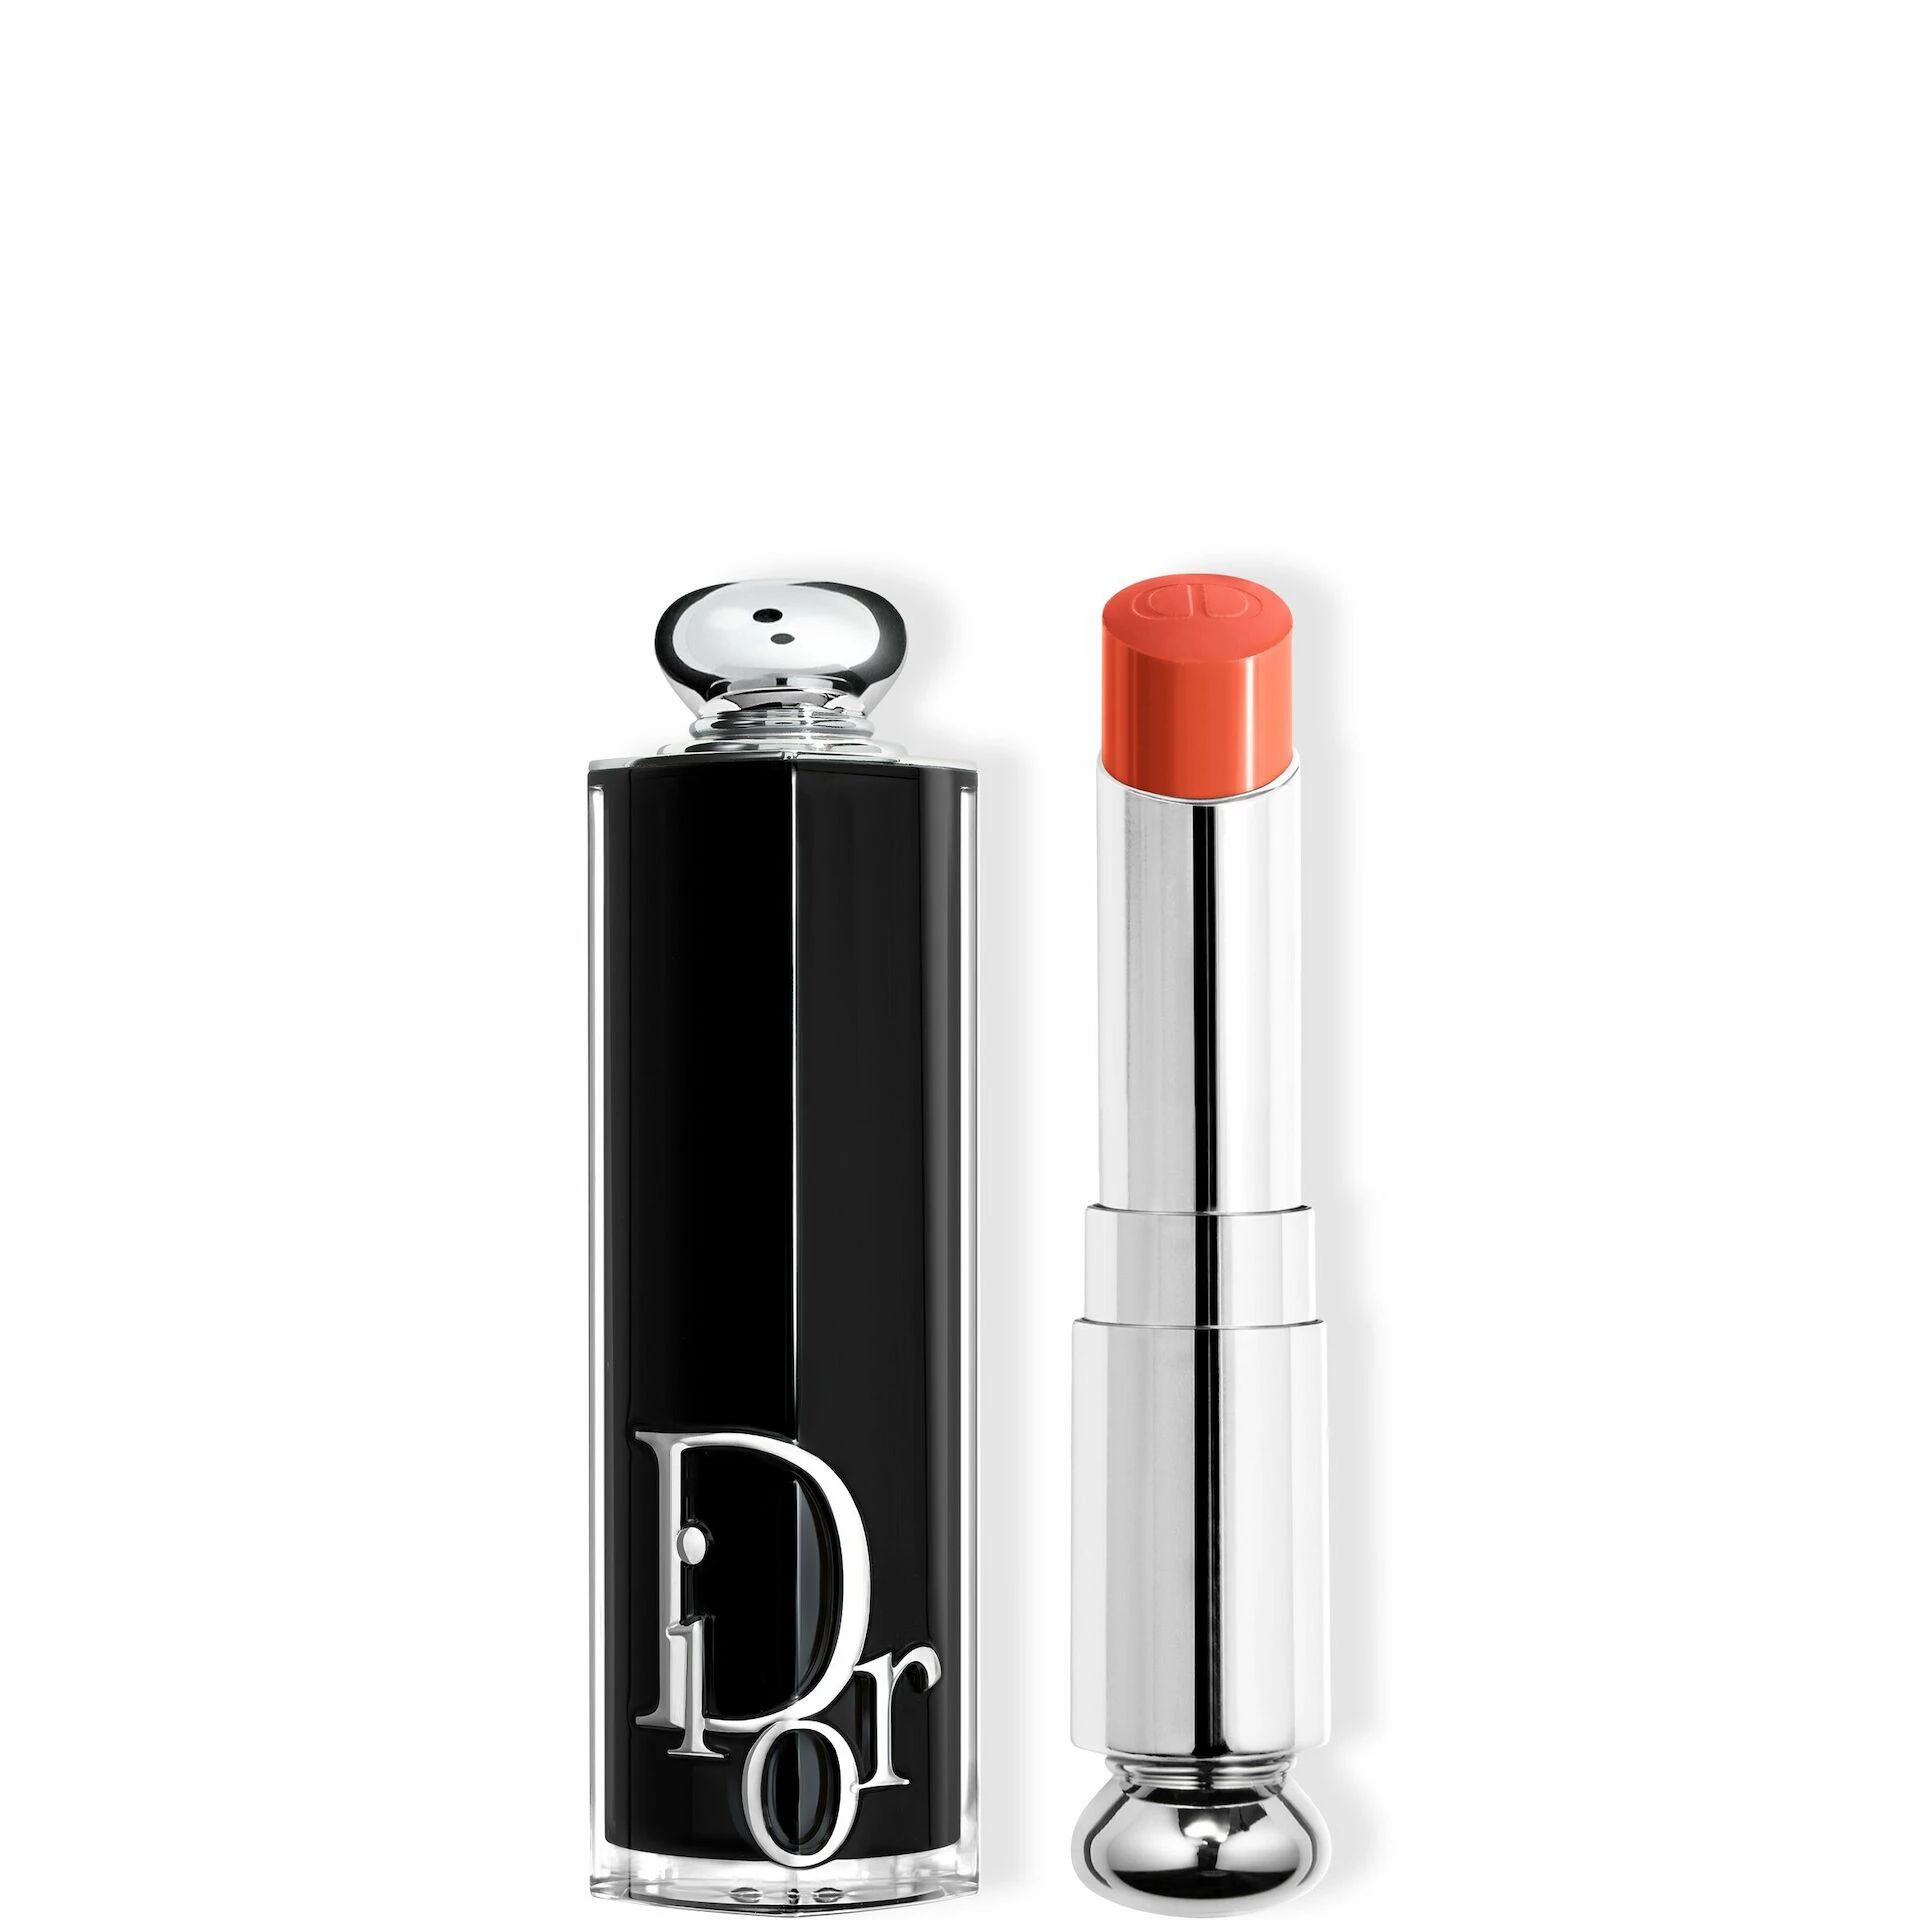 Помада для губ Dior Addict Refillable Coral Bayadere, №659, 3,5 г помада для губ dior addict refillable глянцевая тон 972 silhouette 3 2 г